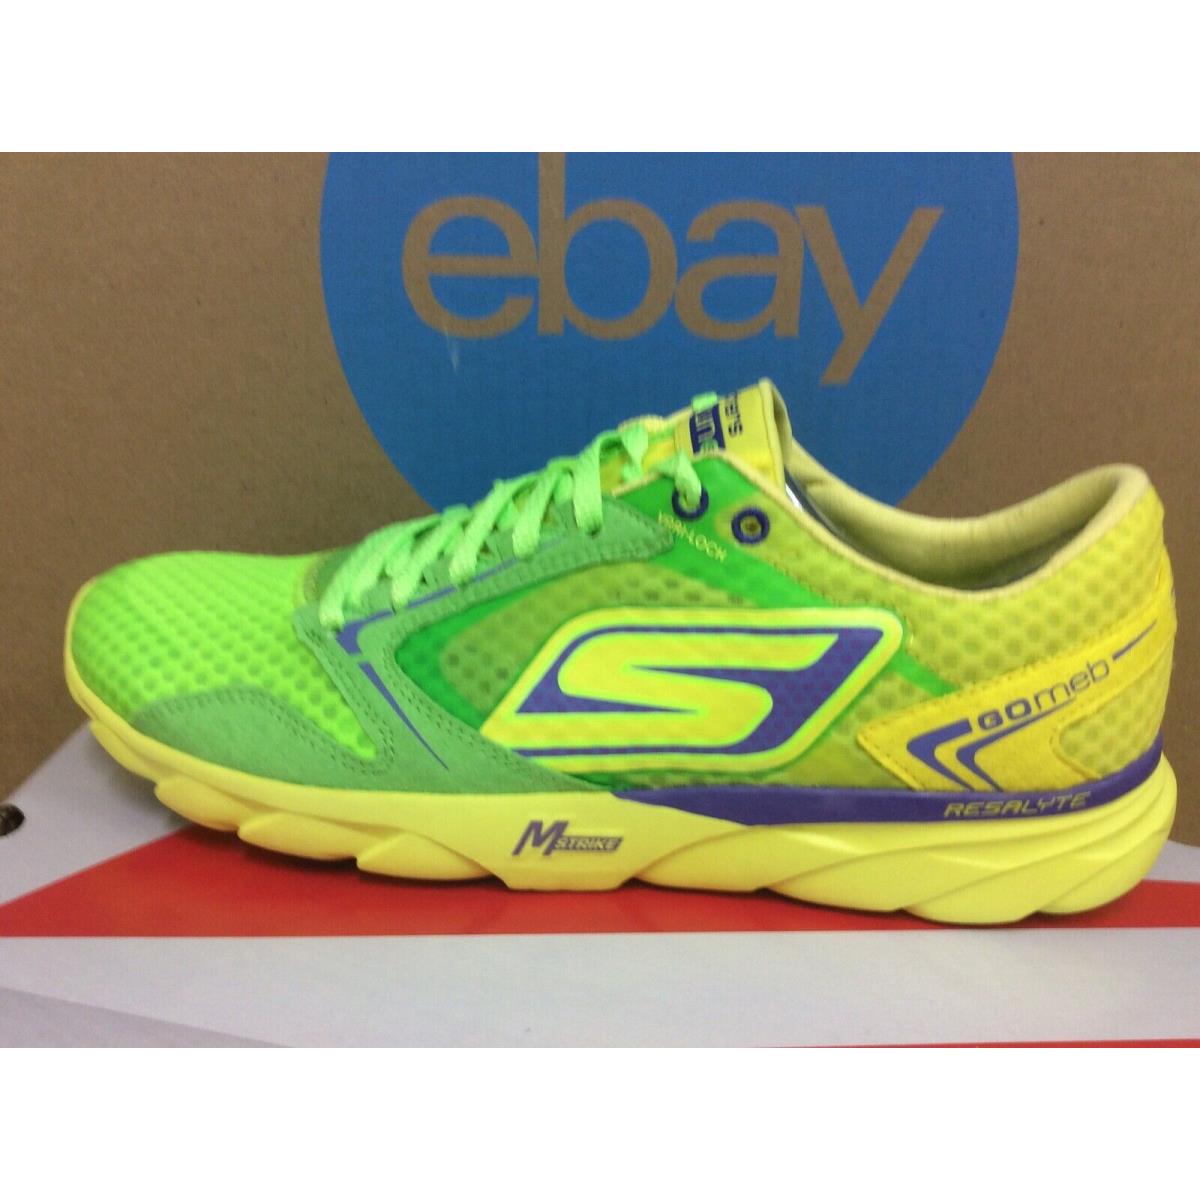 2013 Skechers Go Run Speed Women s Running Shoes Size 5 Gray Lime E11